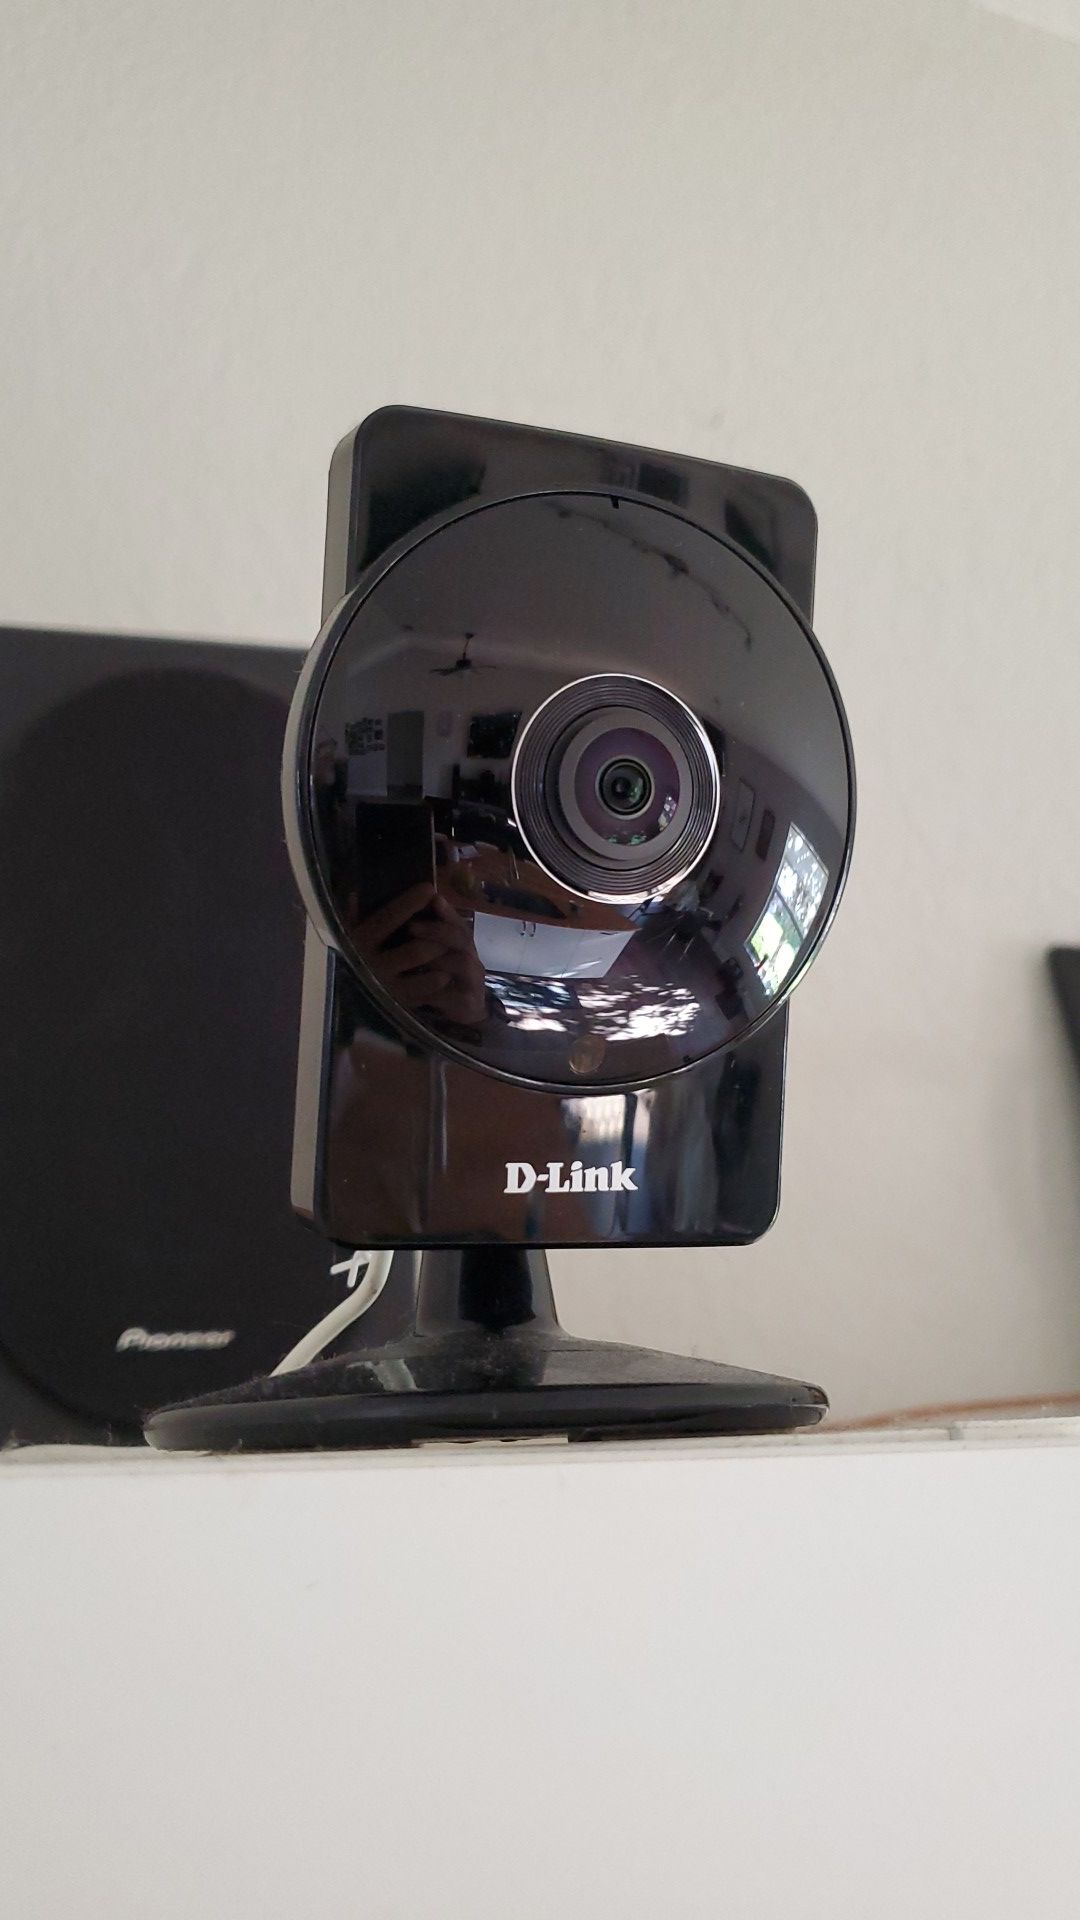 D-Link camera security alarm